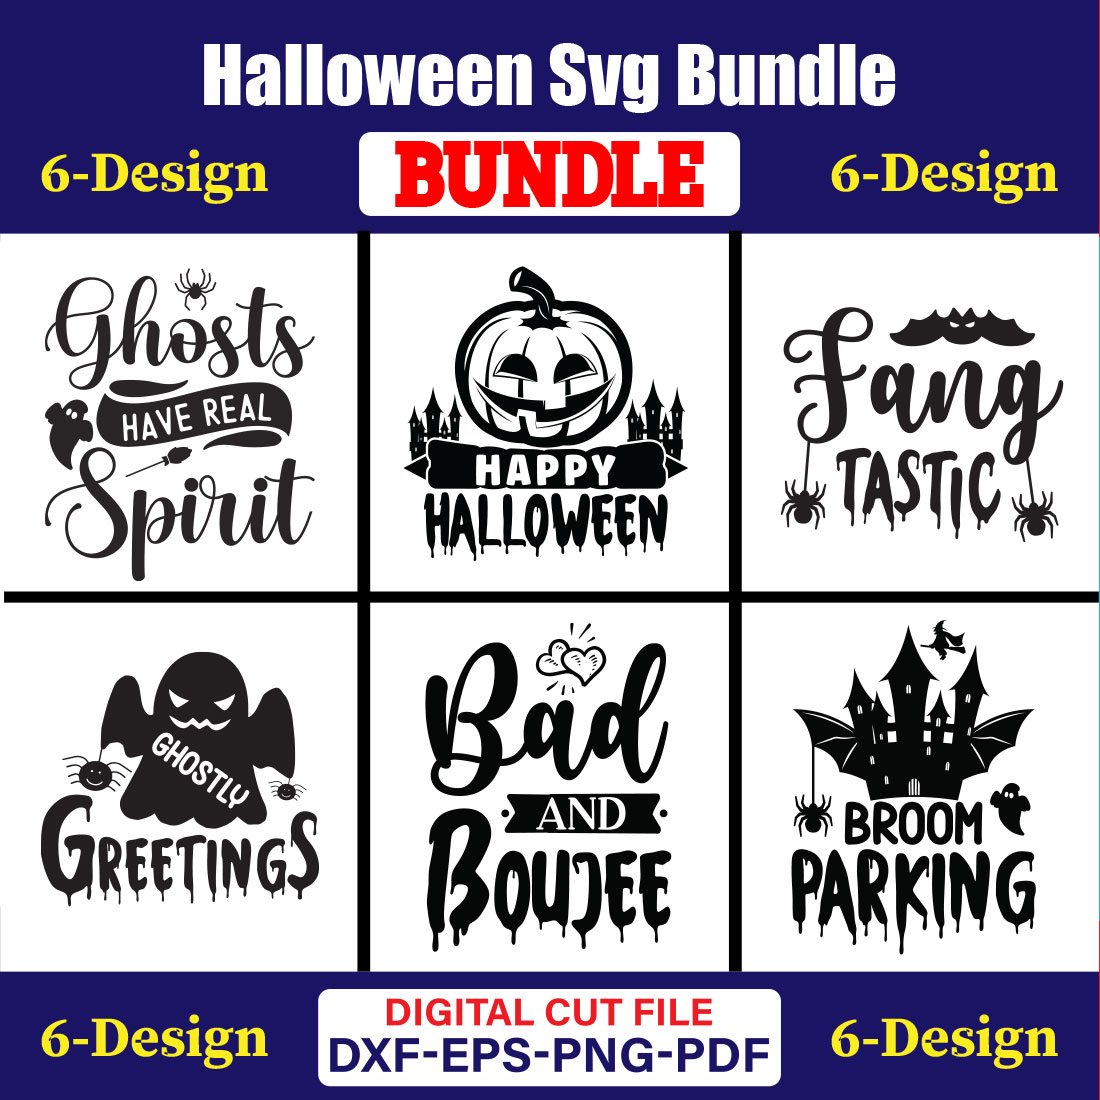 Halloween T-shirt Design Bundle Vol-6 cover image.